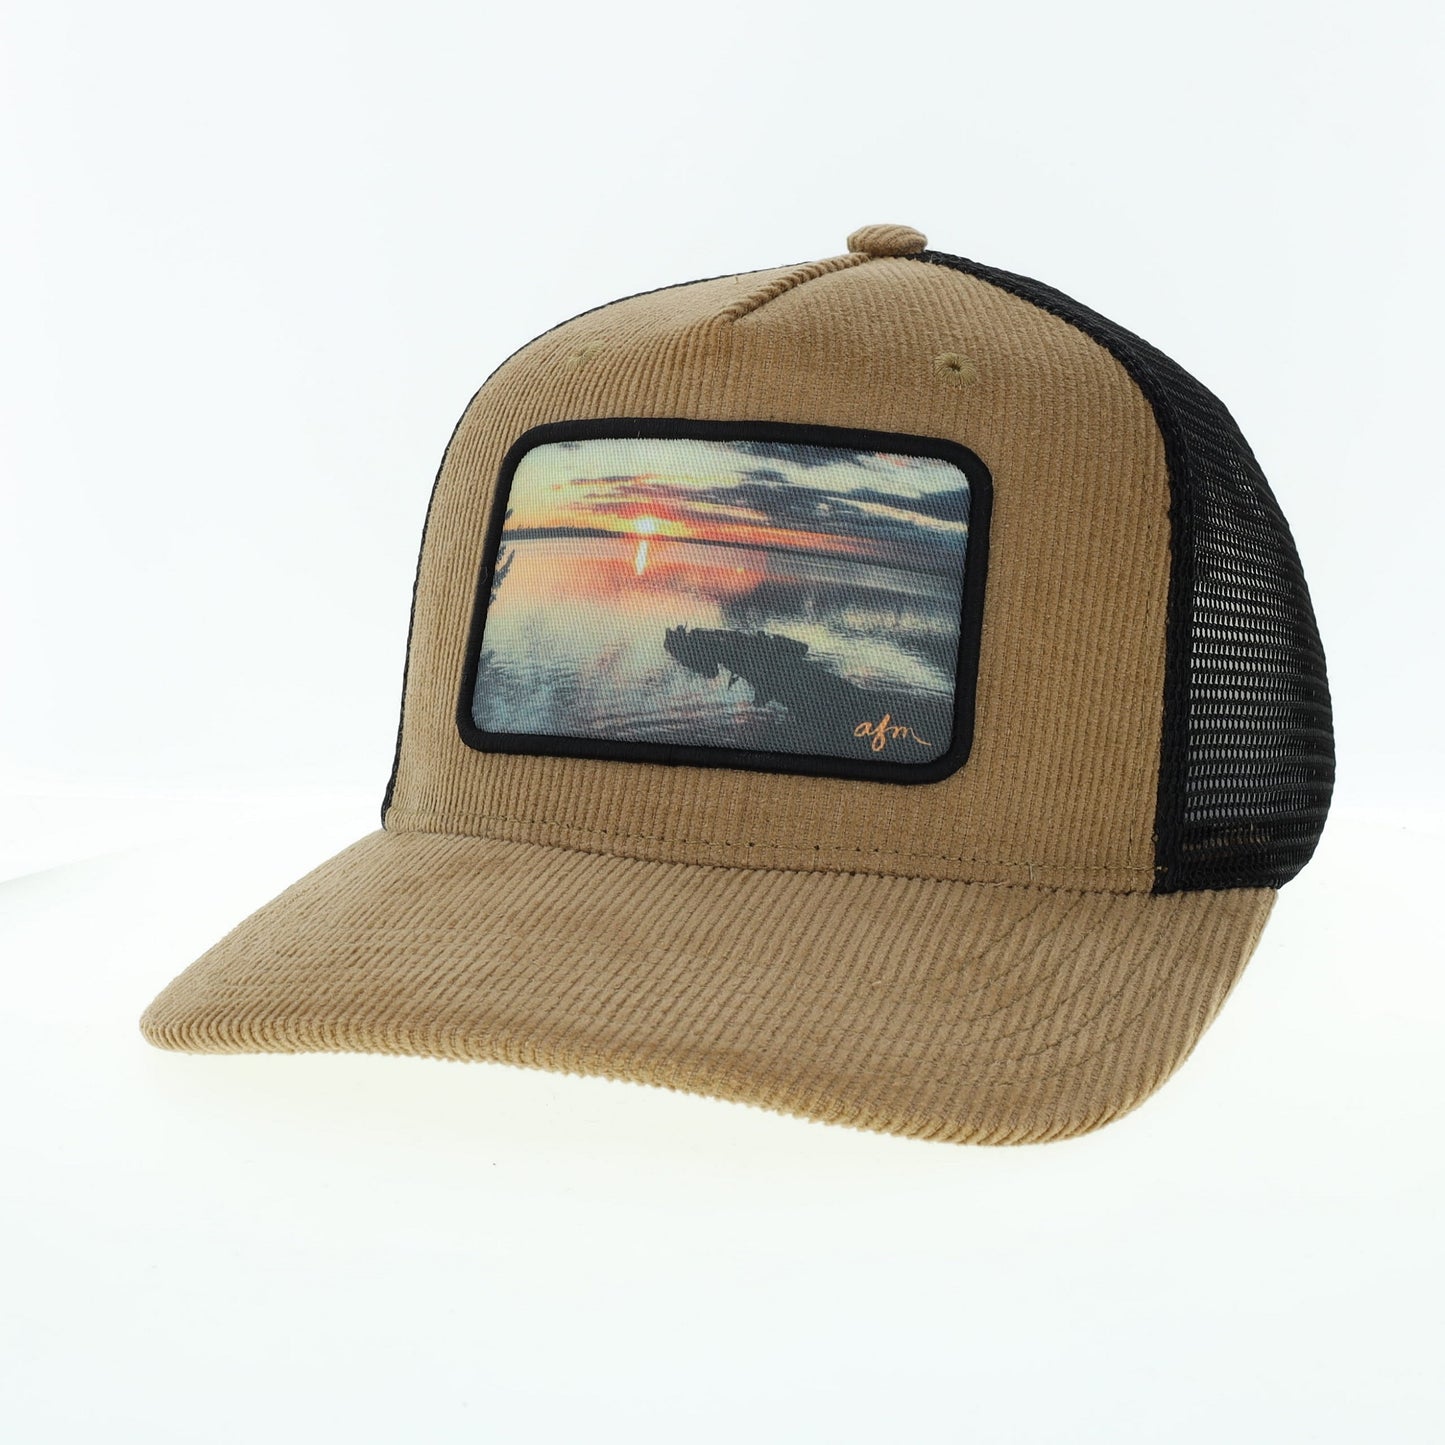 Pier Roadie Trucker Hat in  Corduroy Khaki/Black